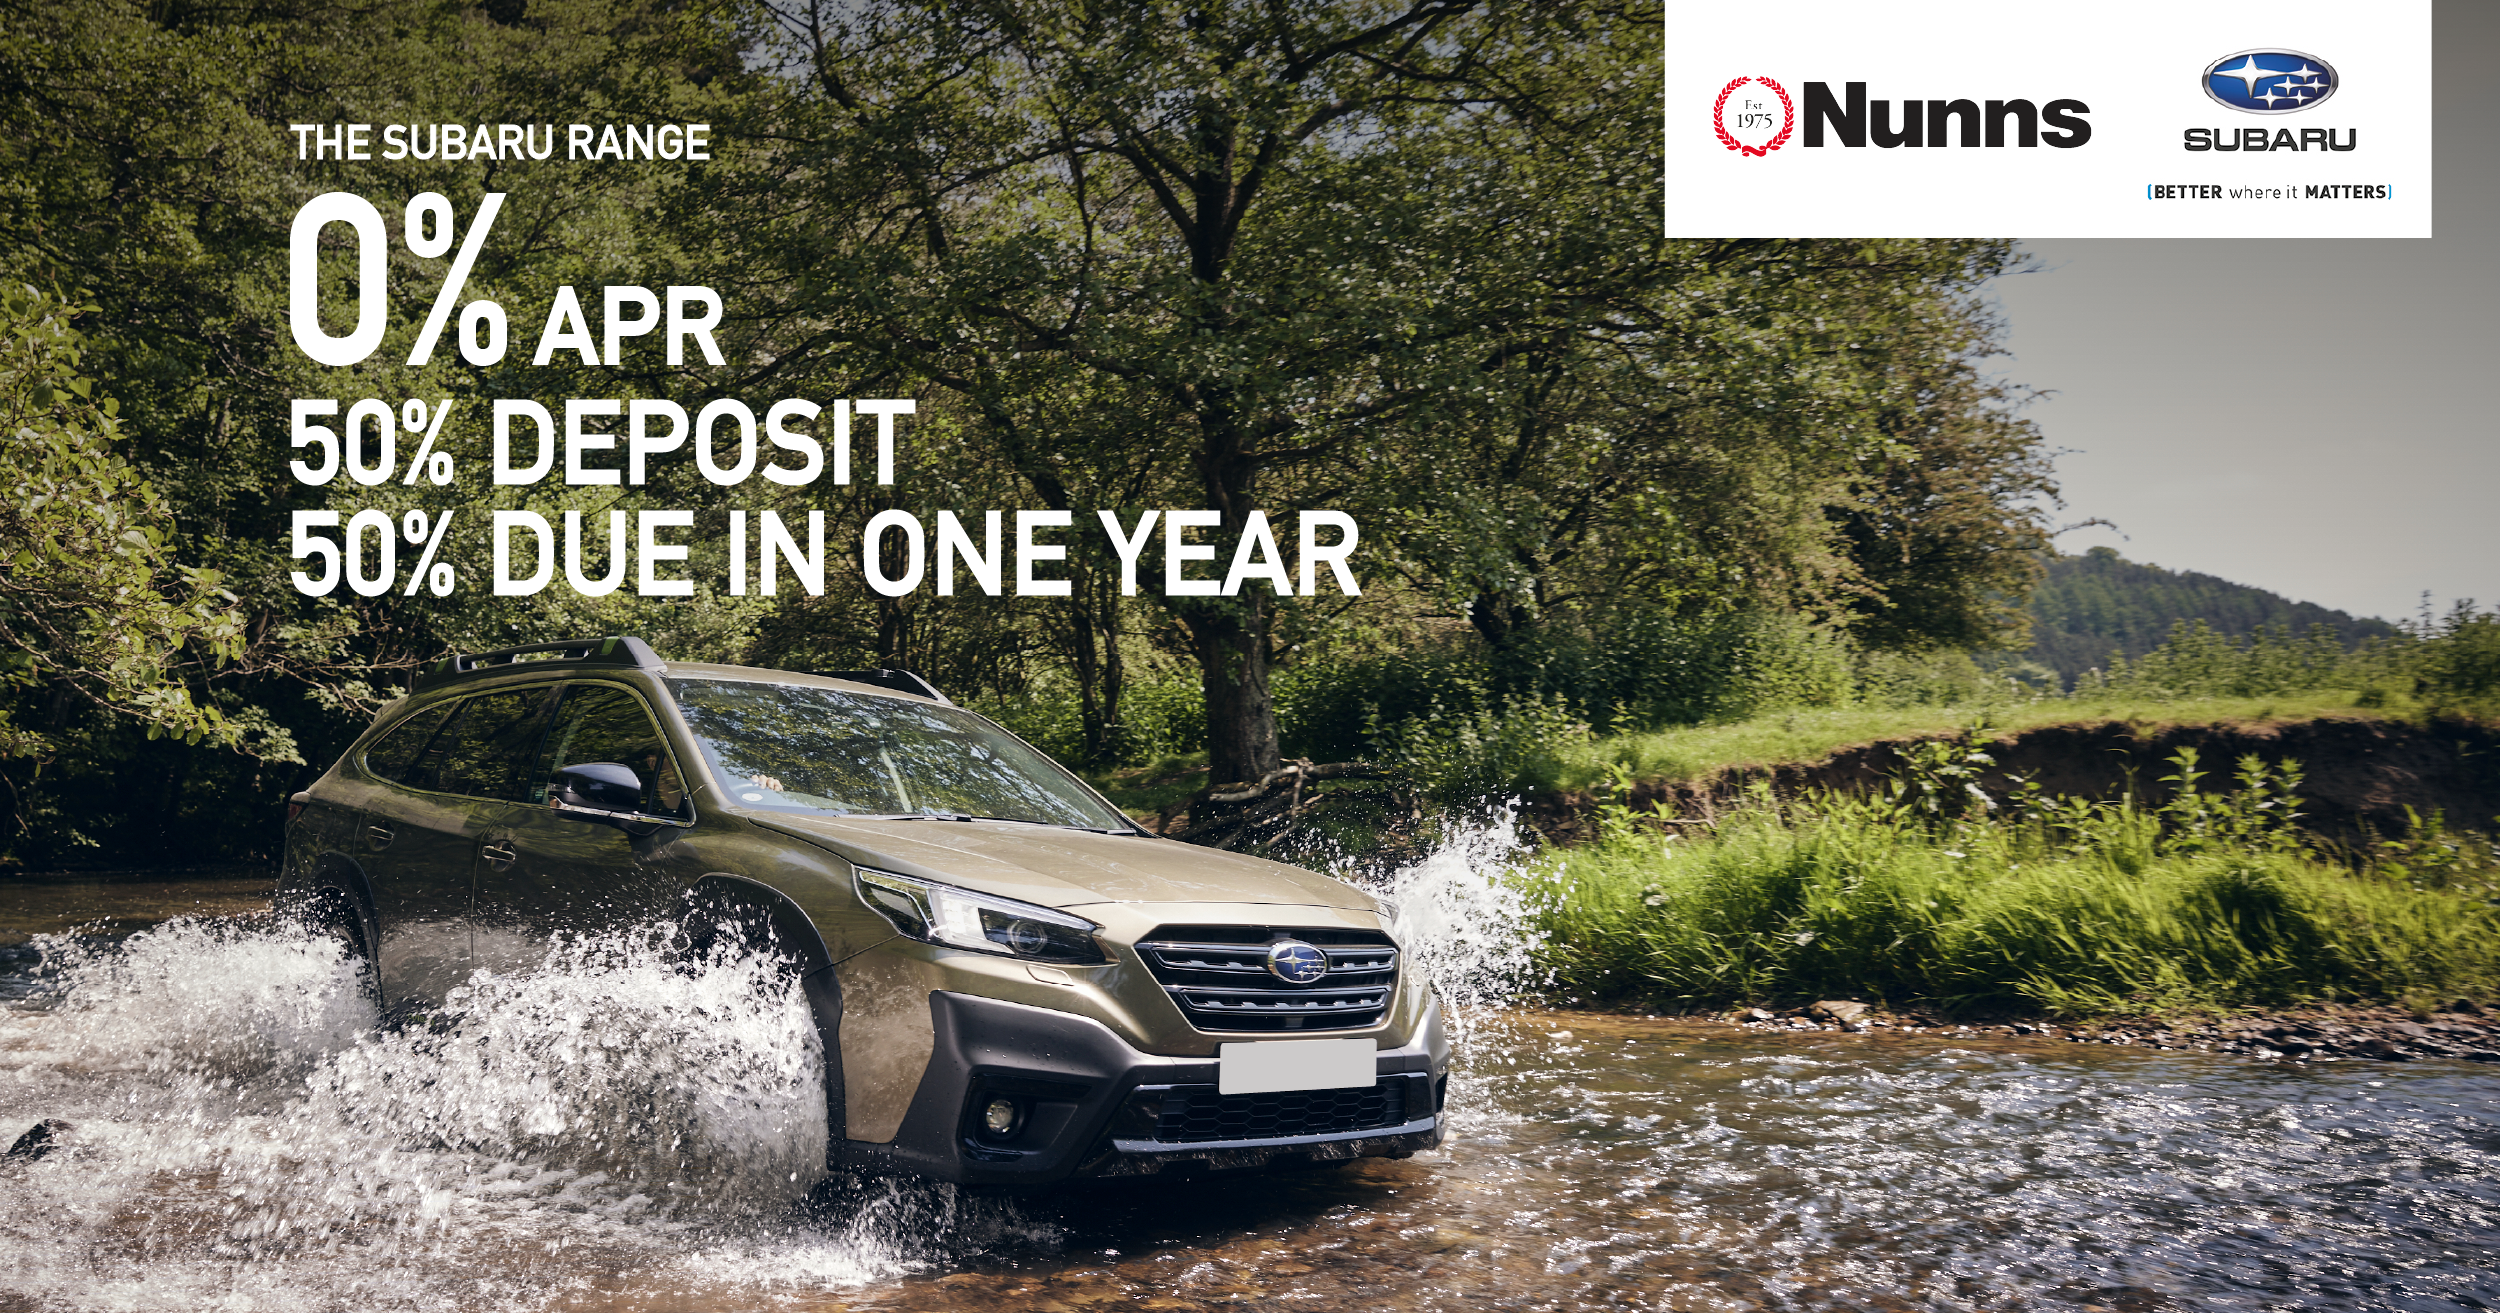 Subaru Pay 50% Deposit, Pay 50% In One Year